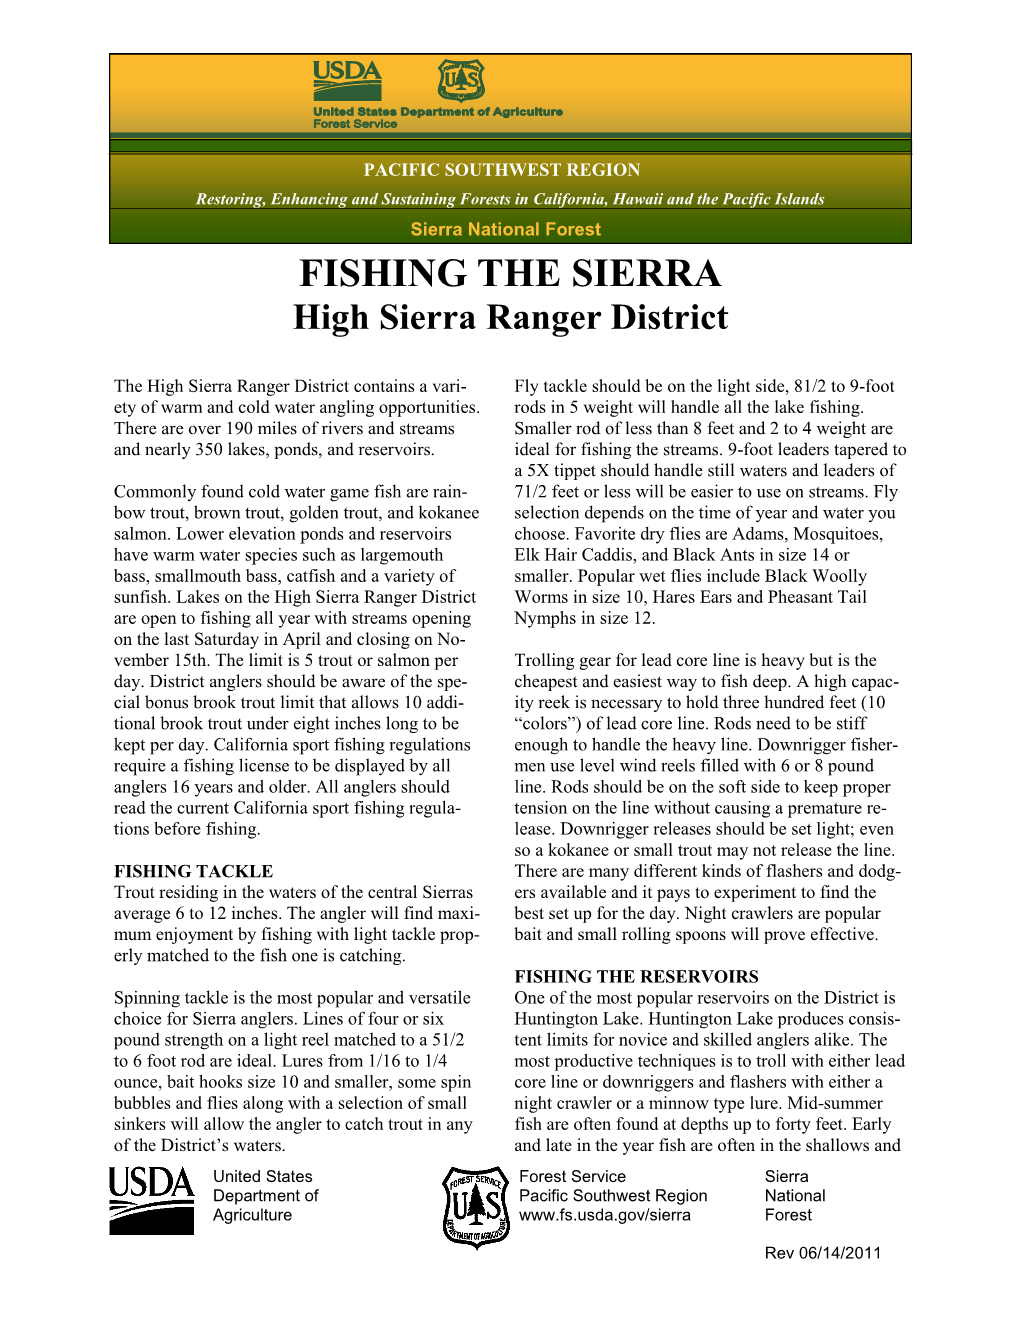 FISHING the SIERRA High Sierra Ranger District